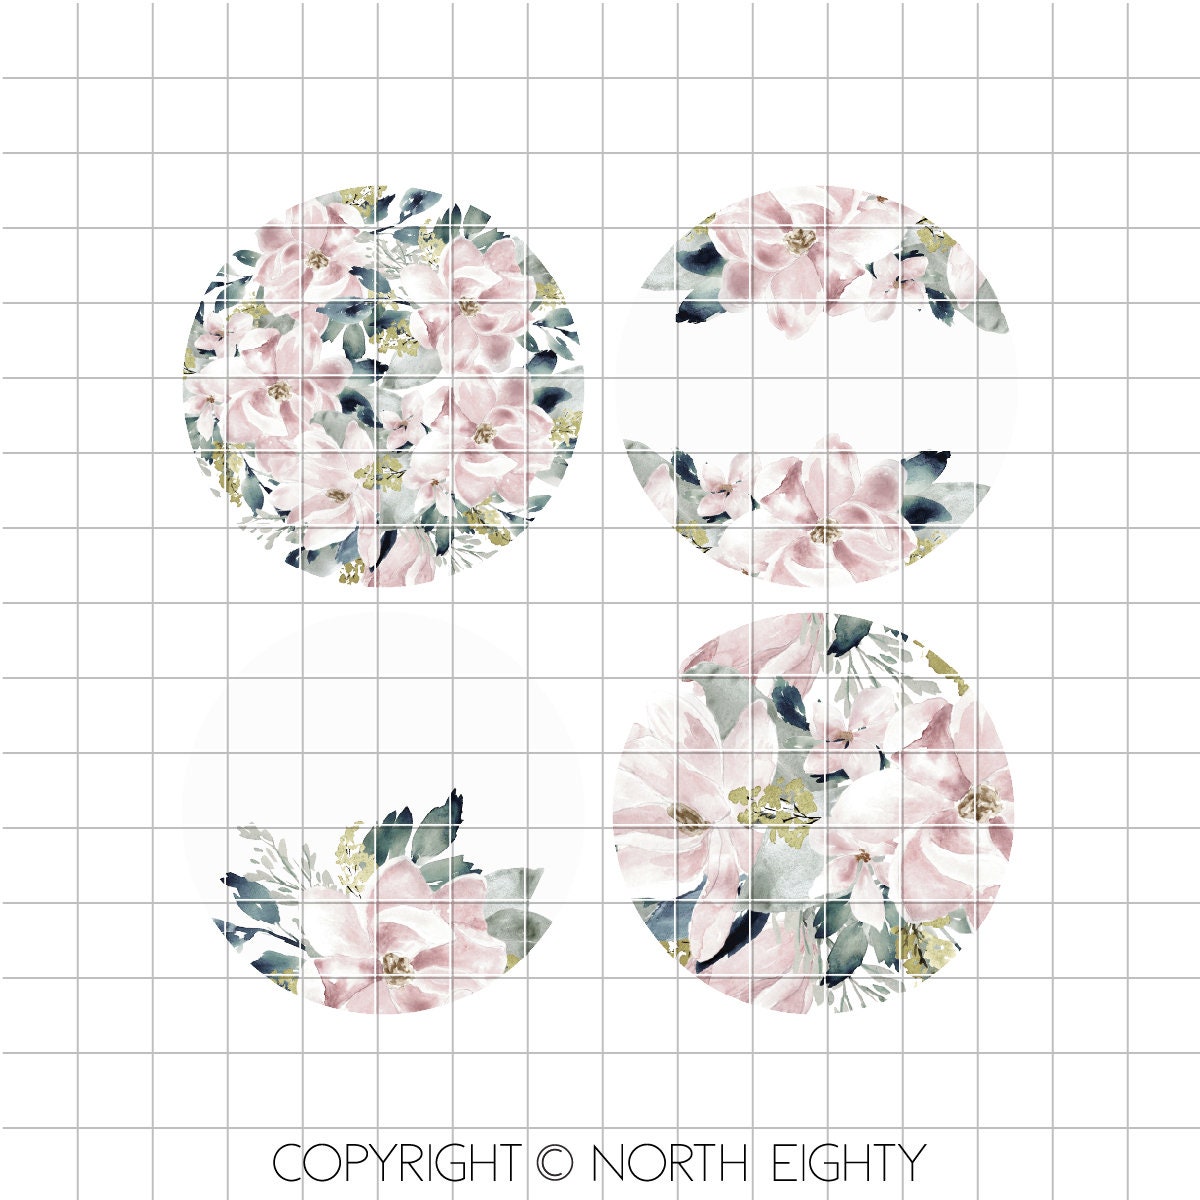 Car Coaster Sublimation Design - Coaster Digital Download - Watercolor Floral - Flowers - Magnolia